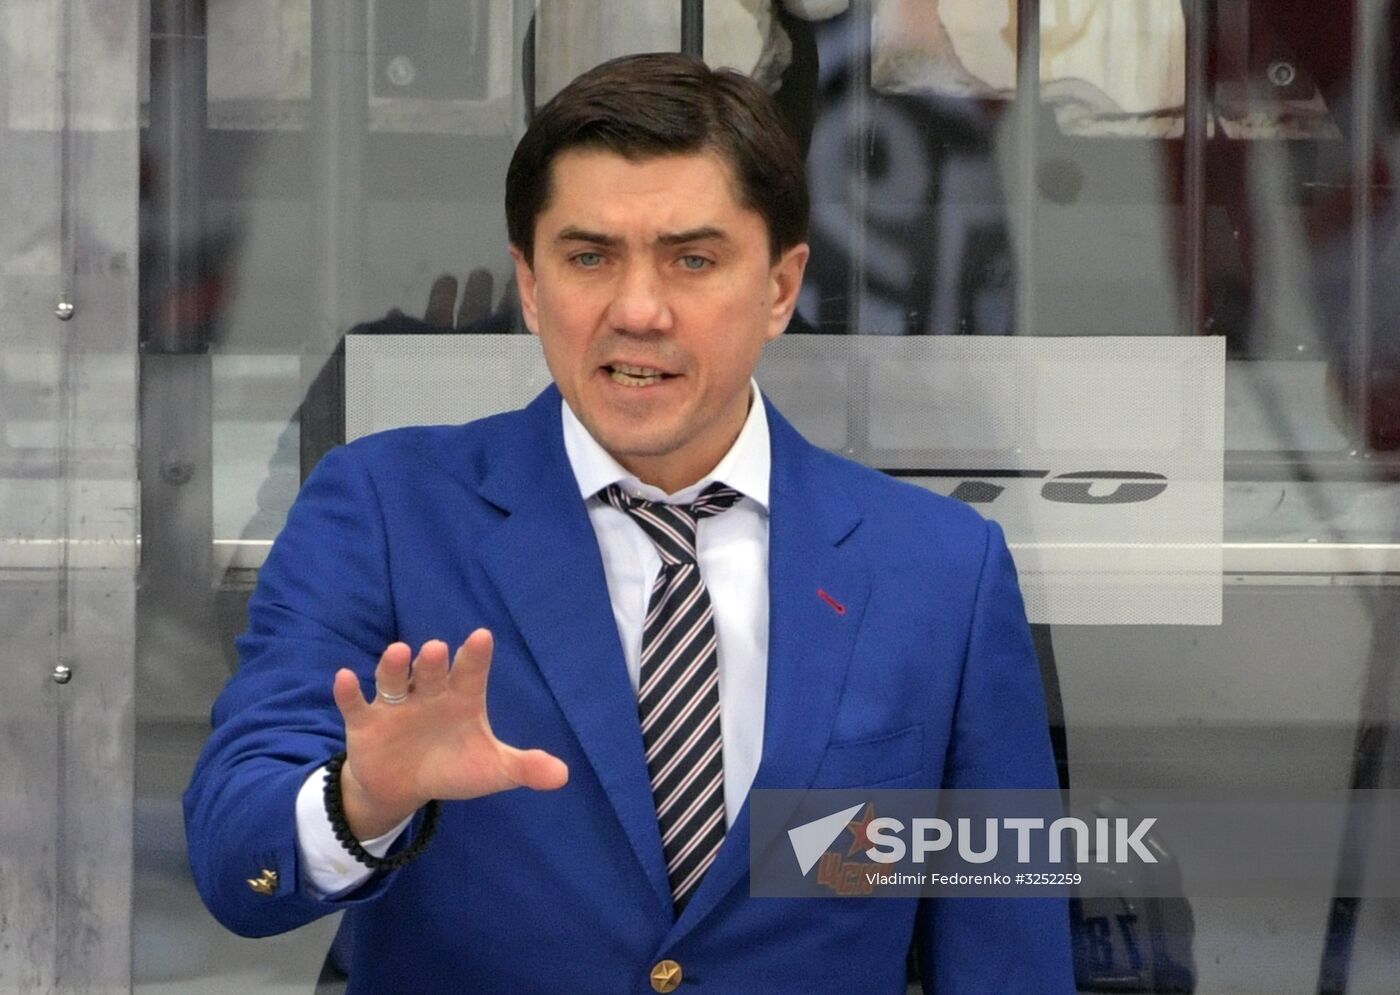 Hockey. KHL. Spartak vs CSKA